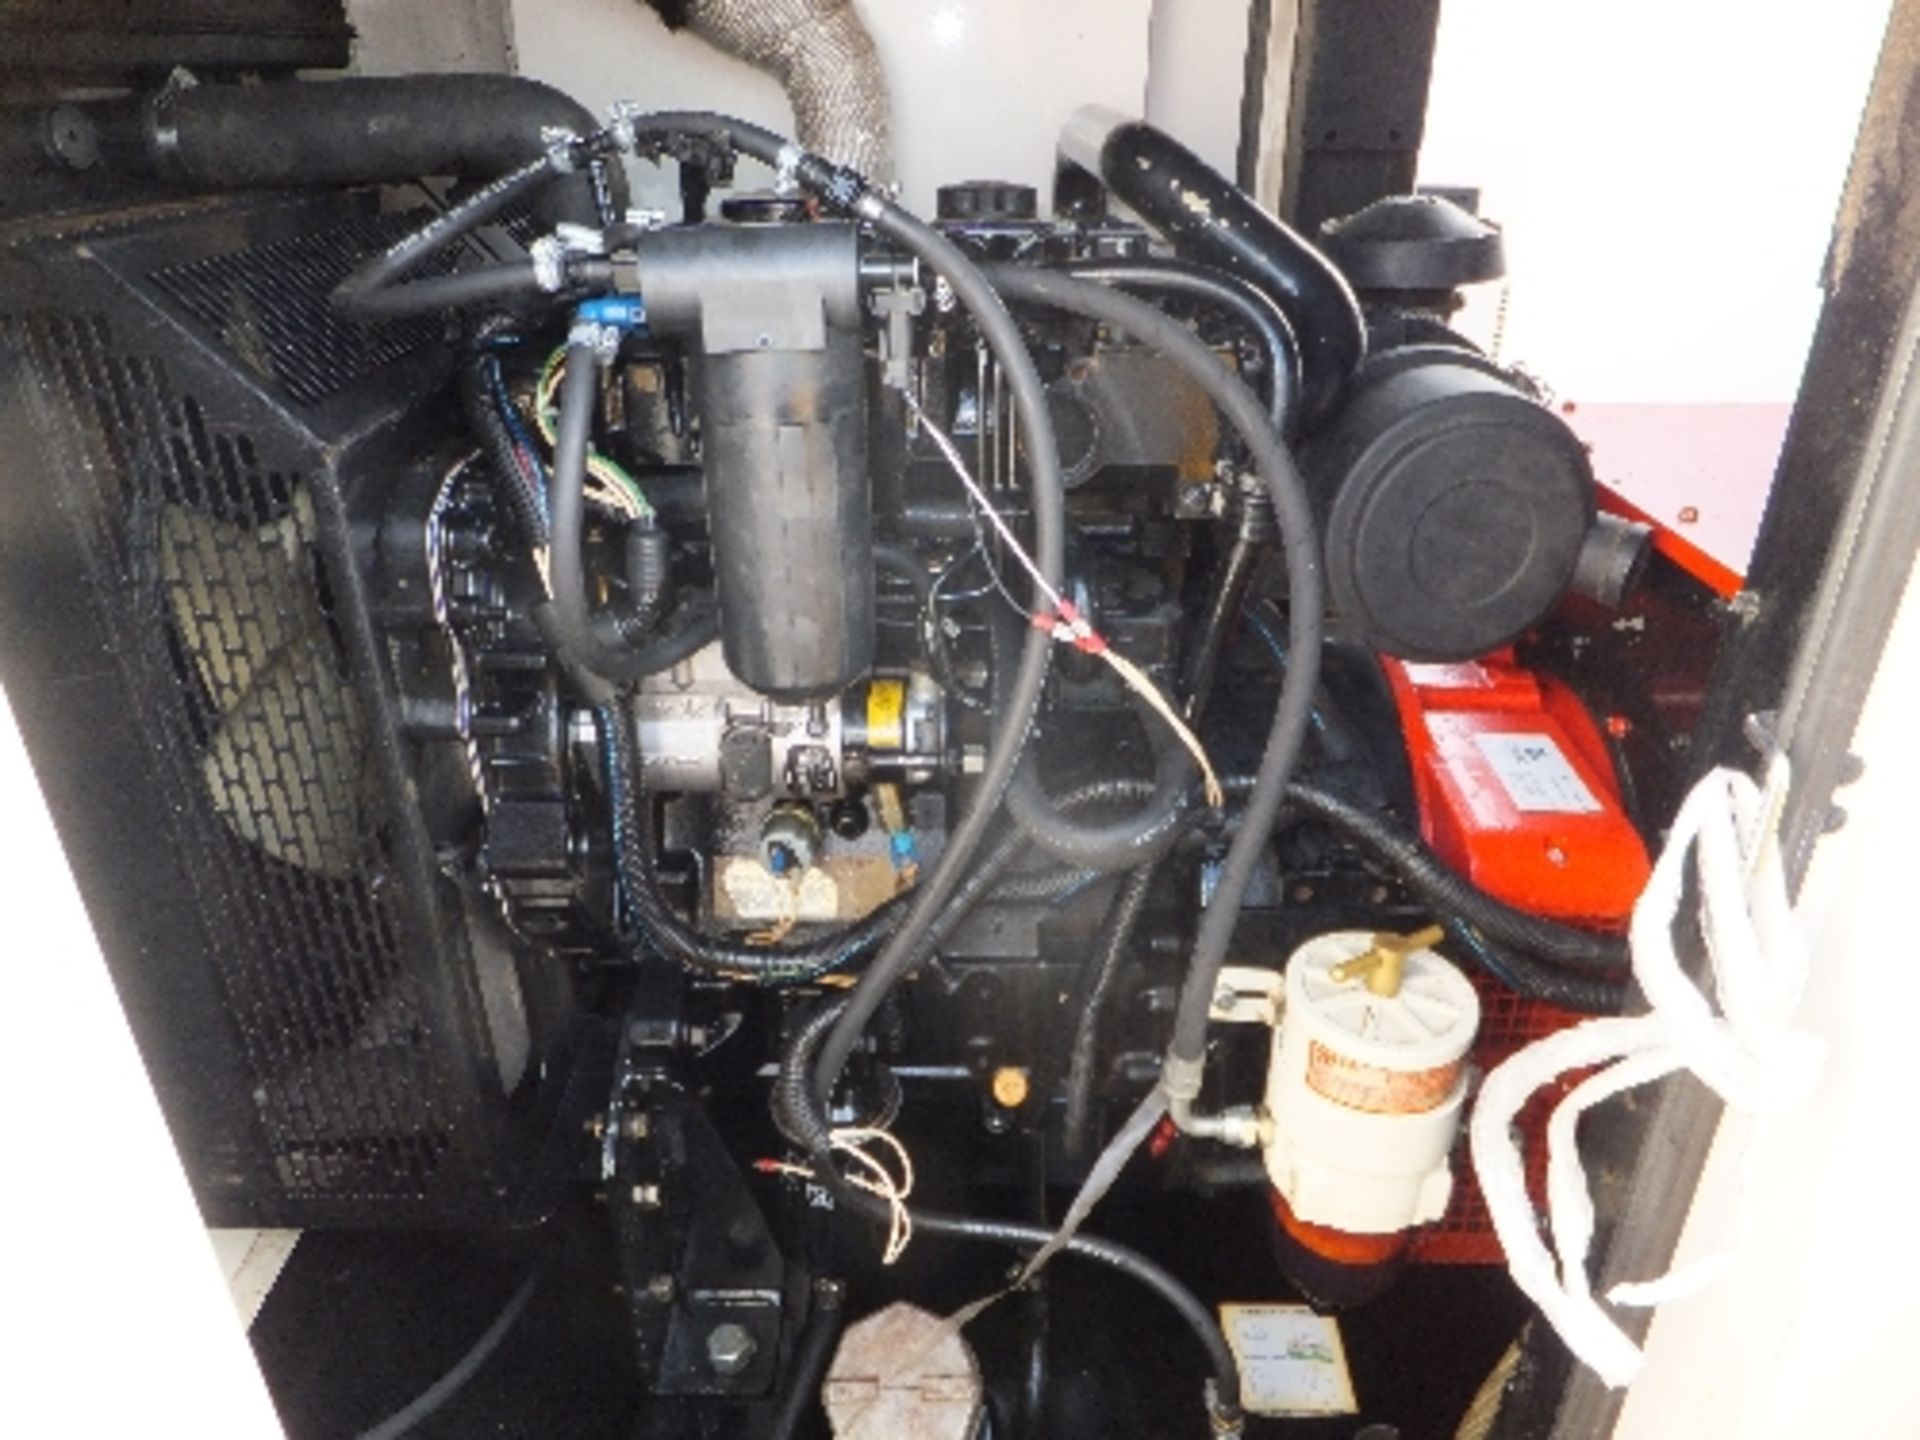 Wilson Perkins XD45P generator - fuel issues, non runner
HF3636 - Image 2 of 3